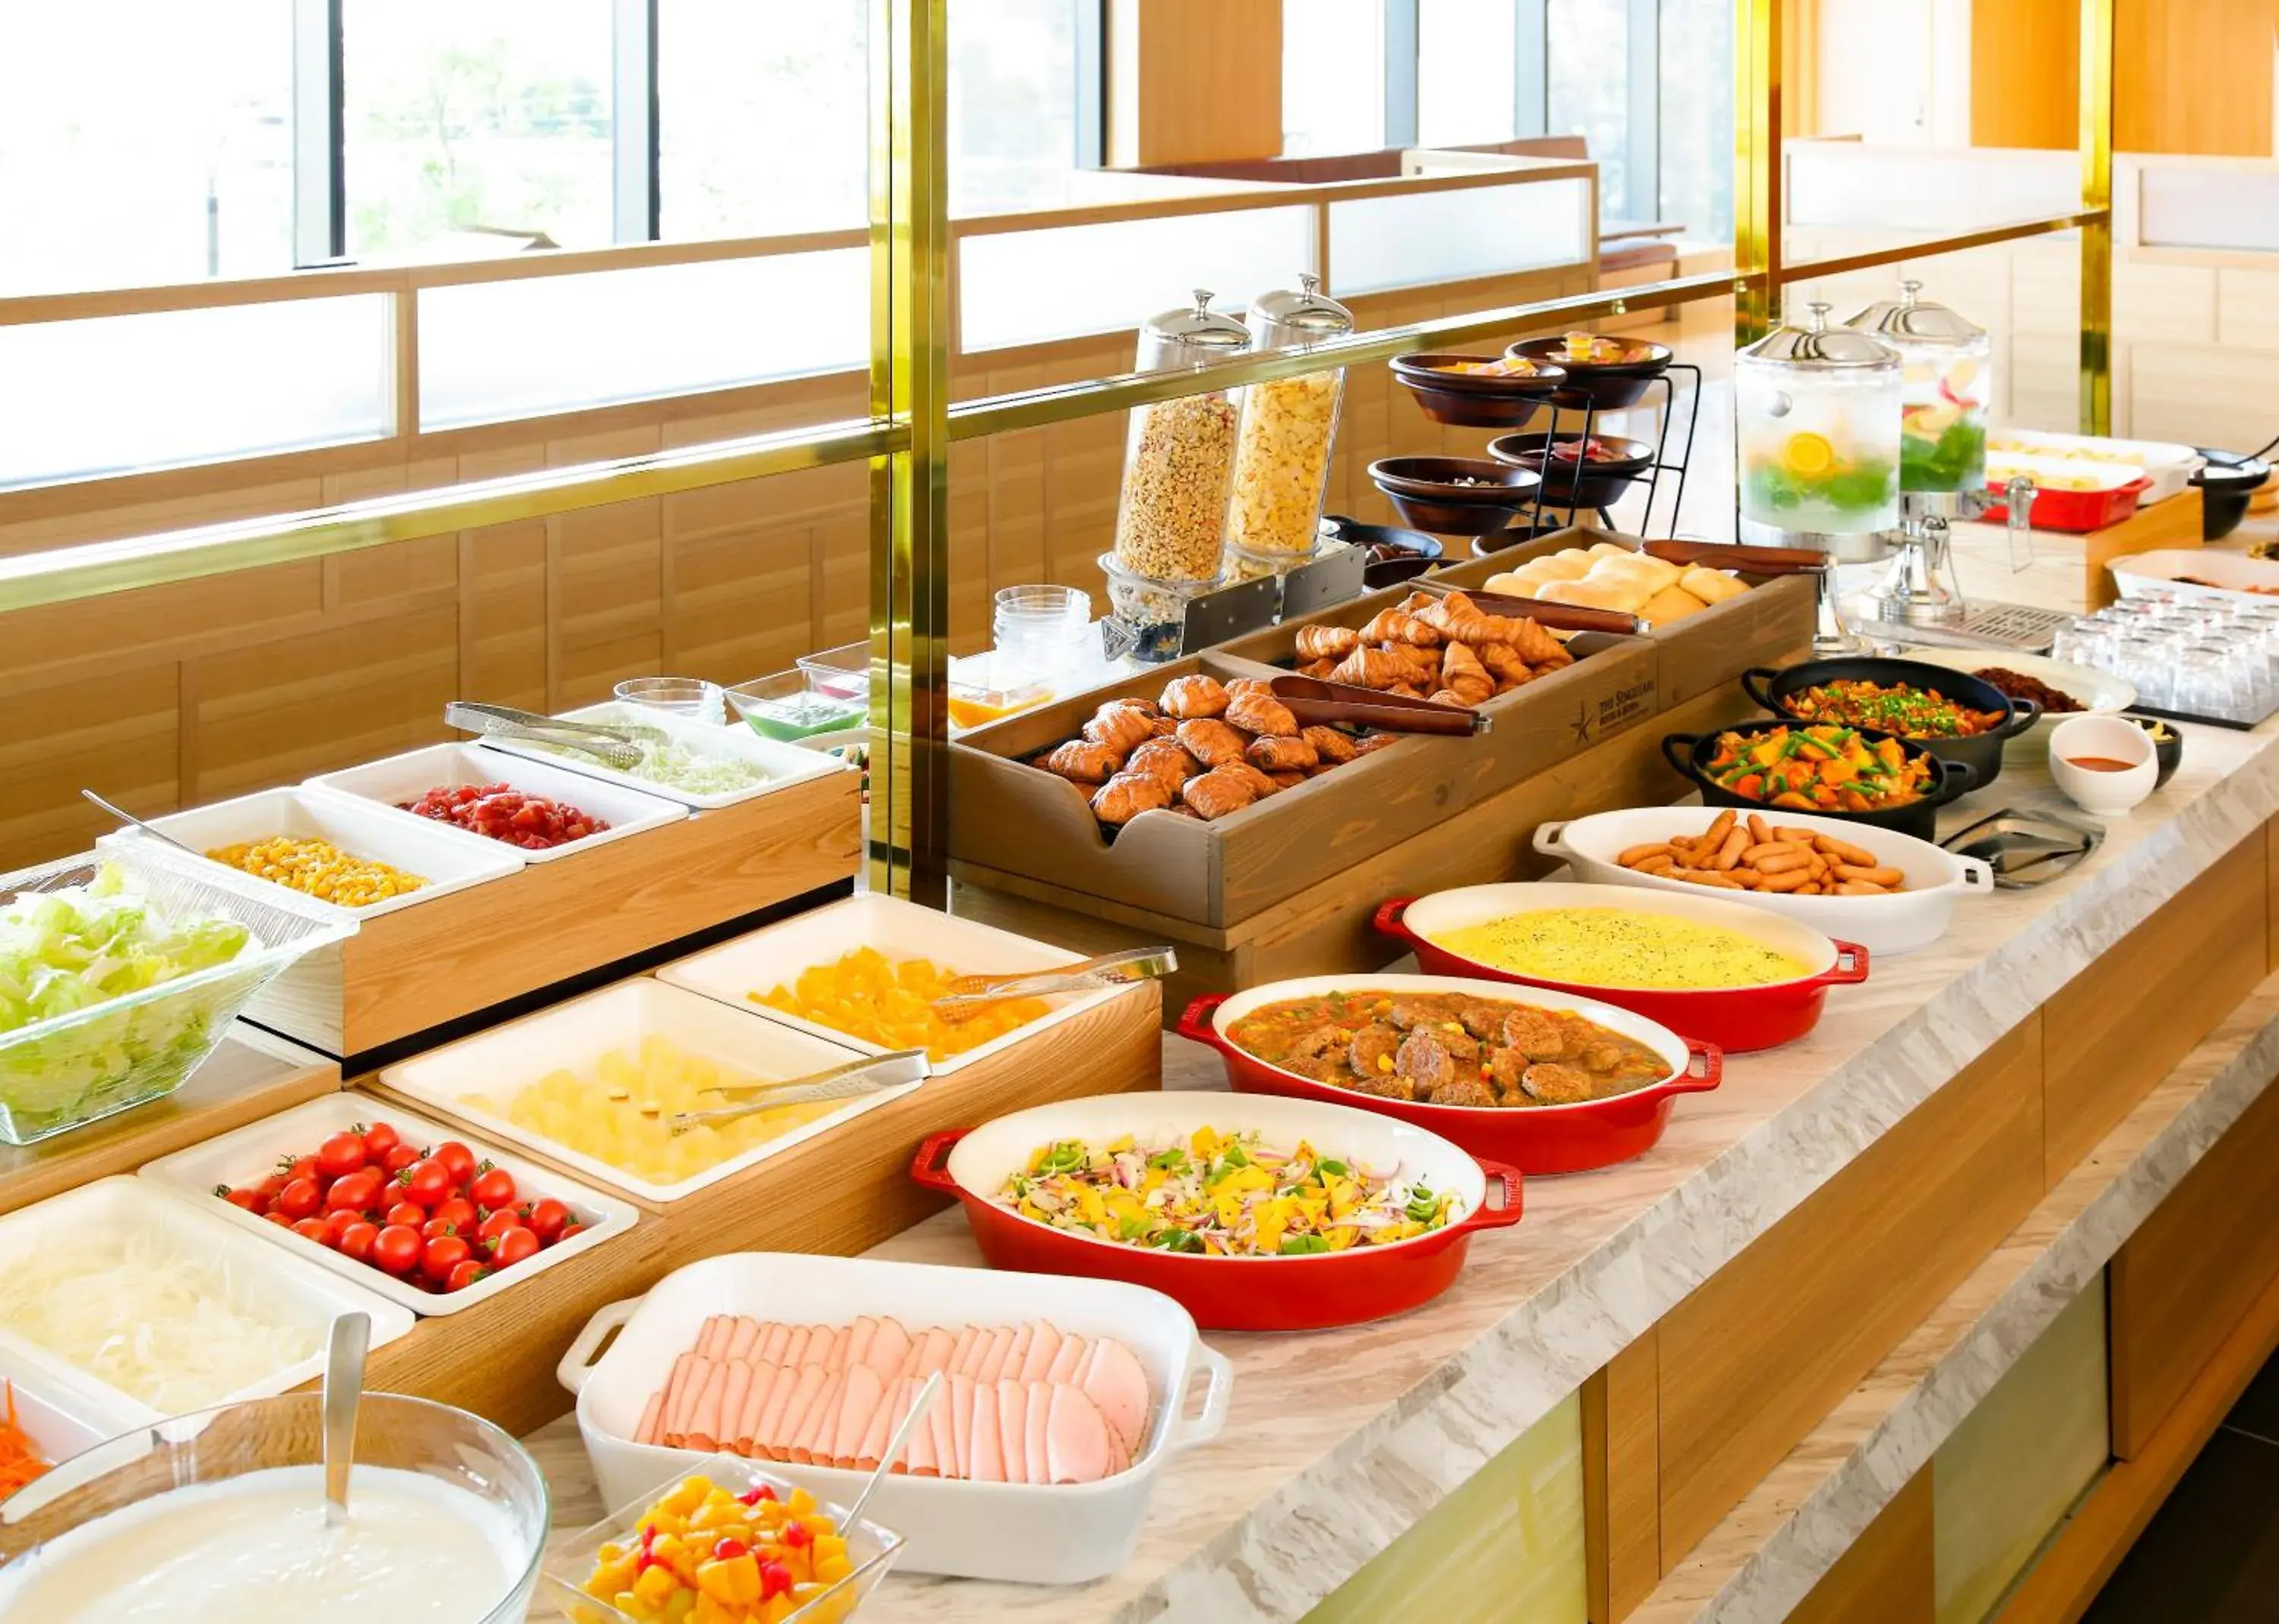 Buffet breakfast in The Singulari Hotel & Skyspa at Universal Studios Japan